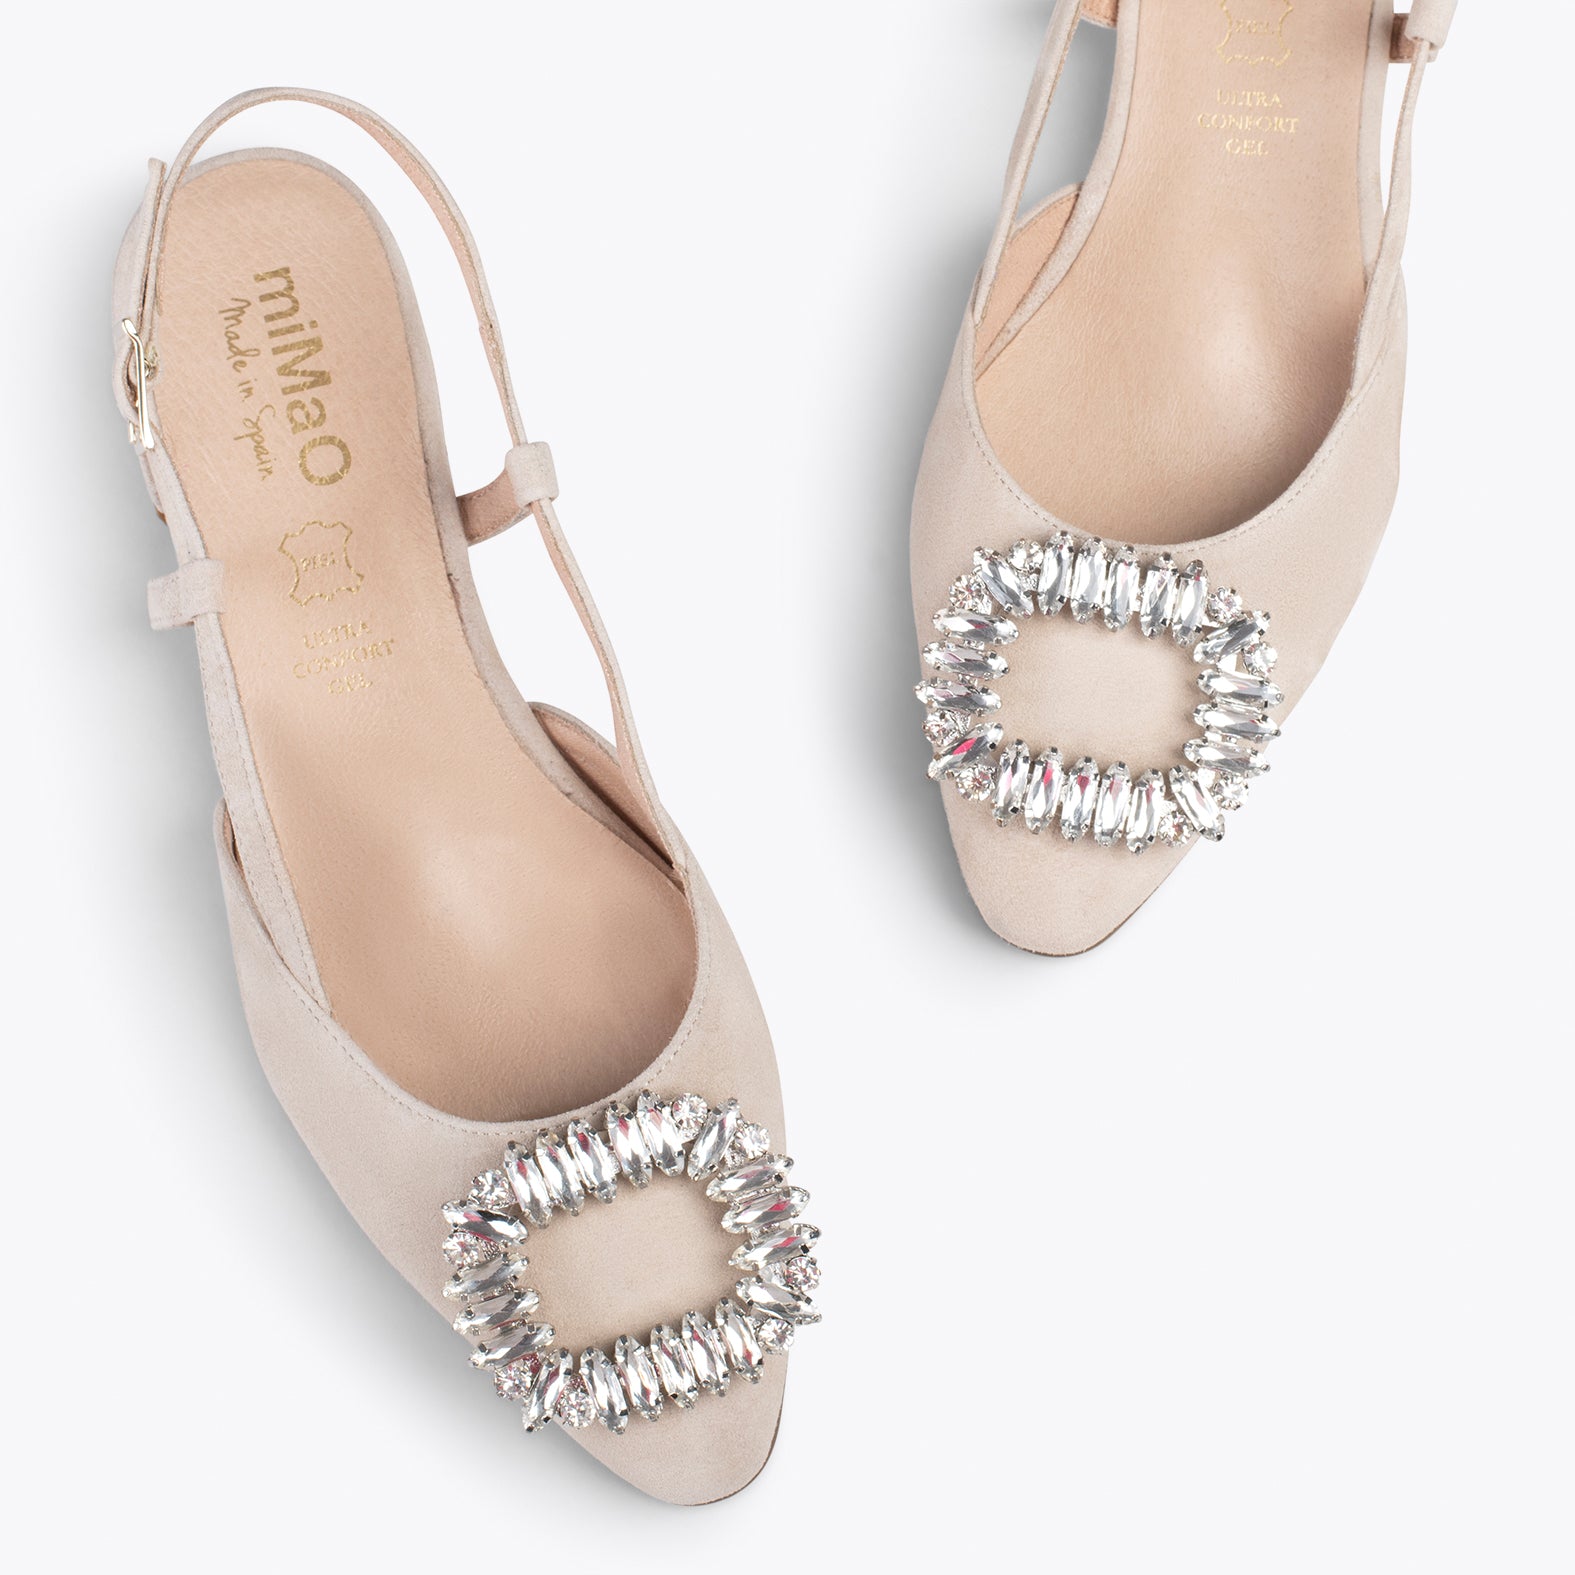 BRUNCH CRISTAL - Zapatos planos destalonados con adorno de cristal TAUPE